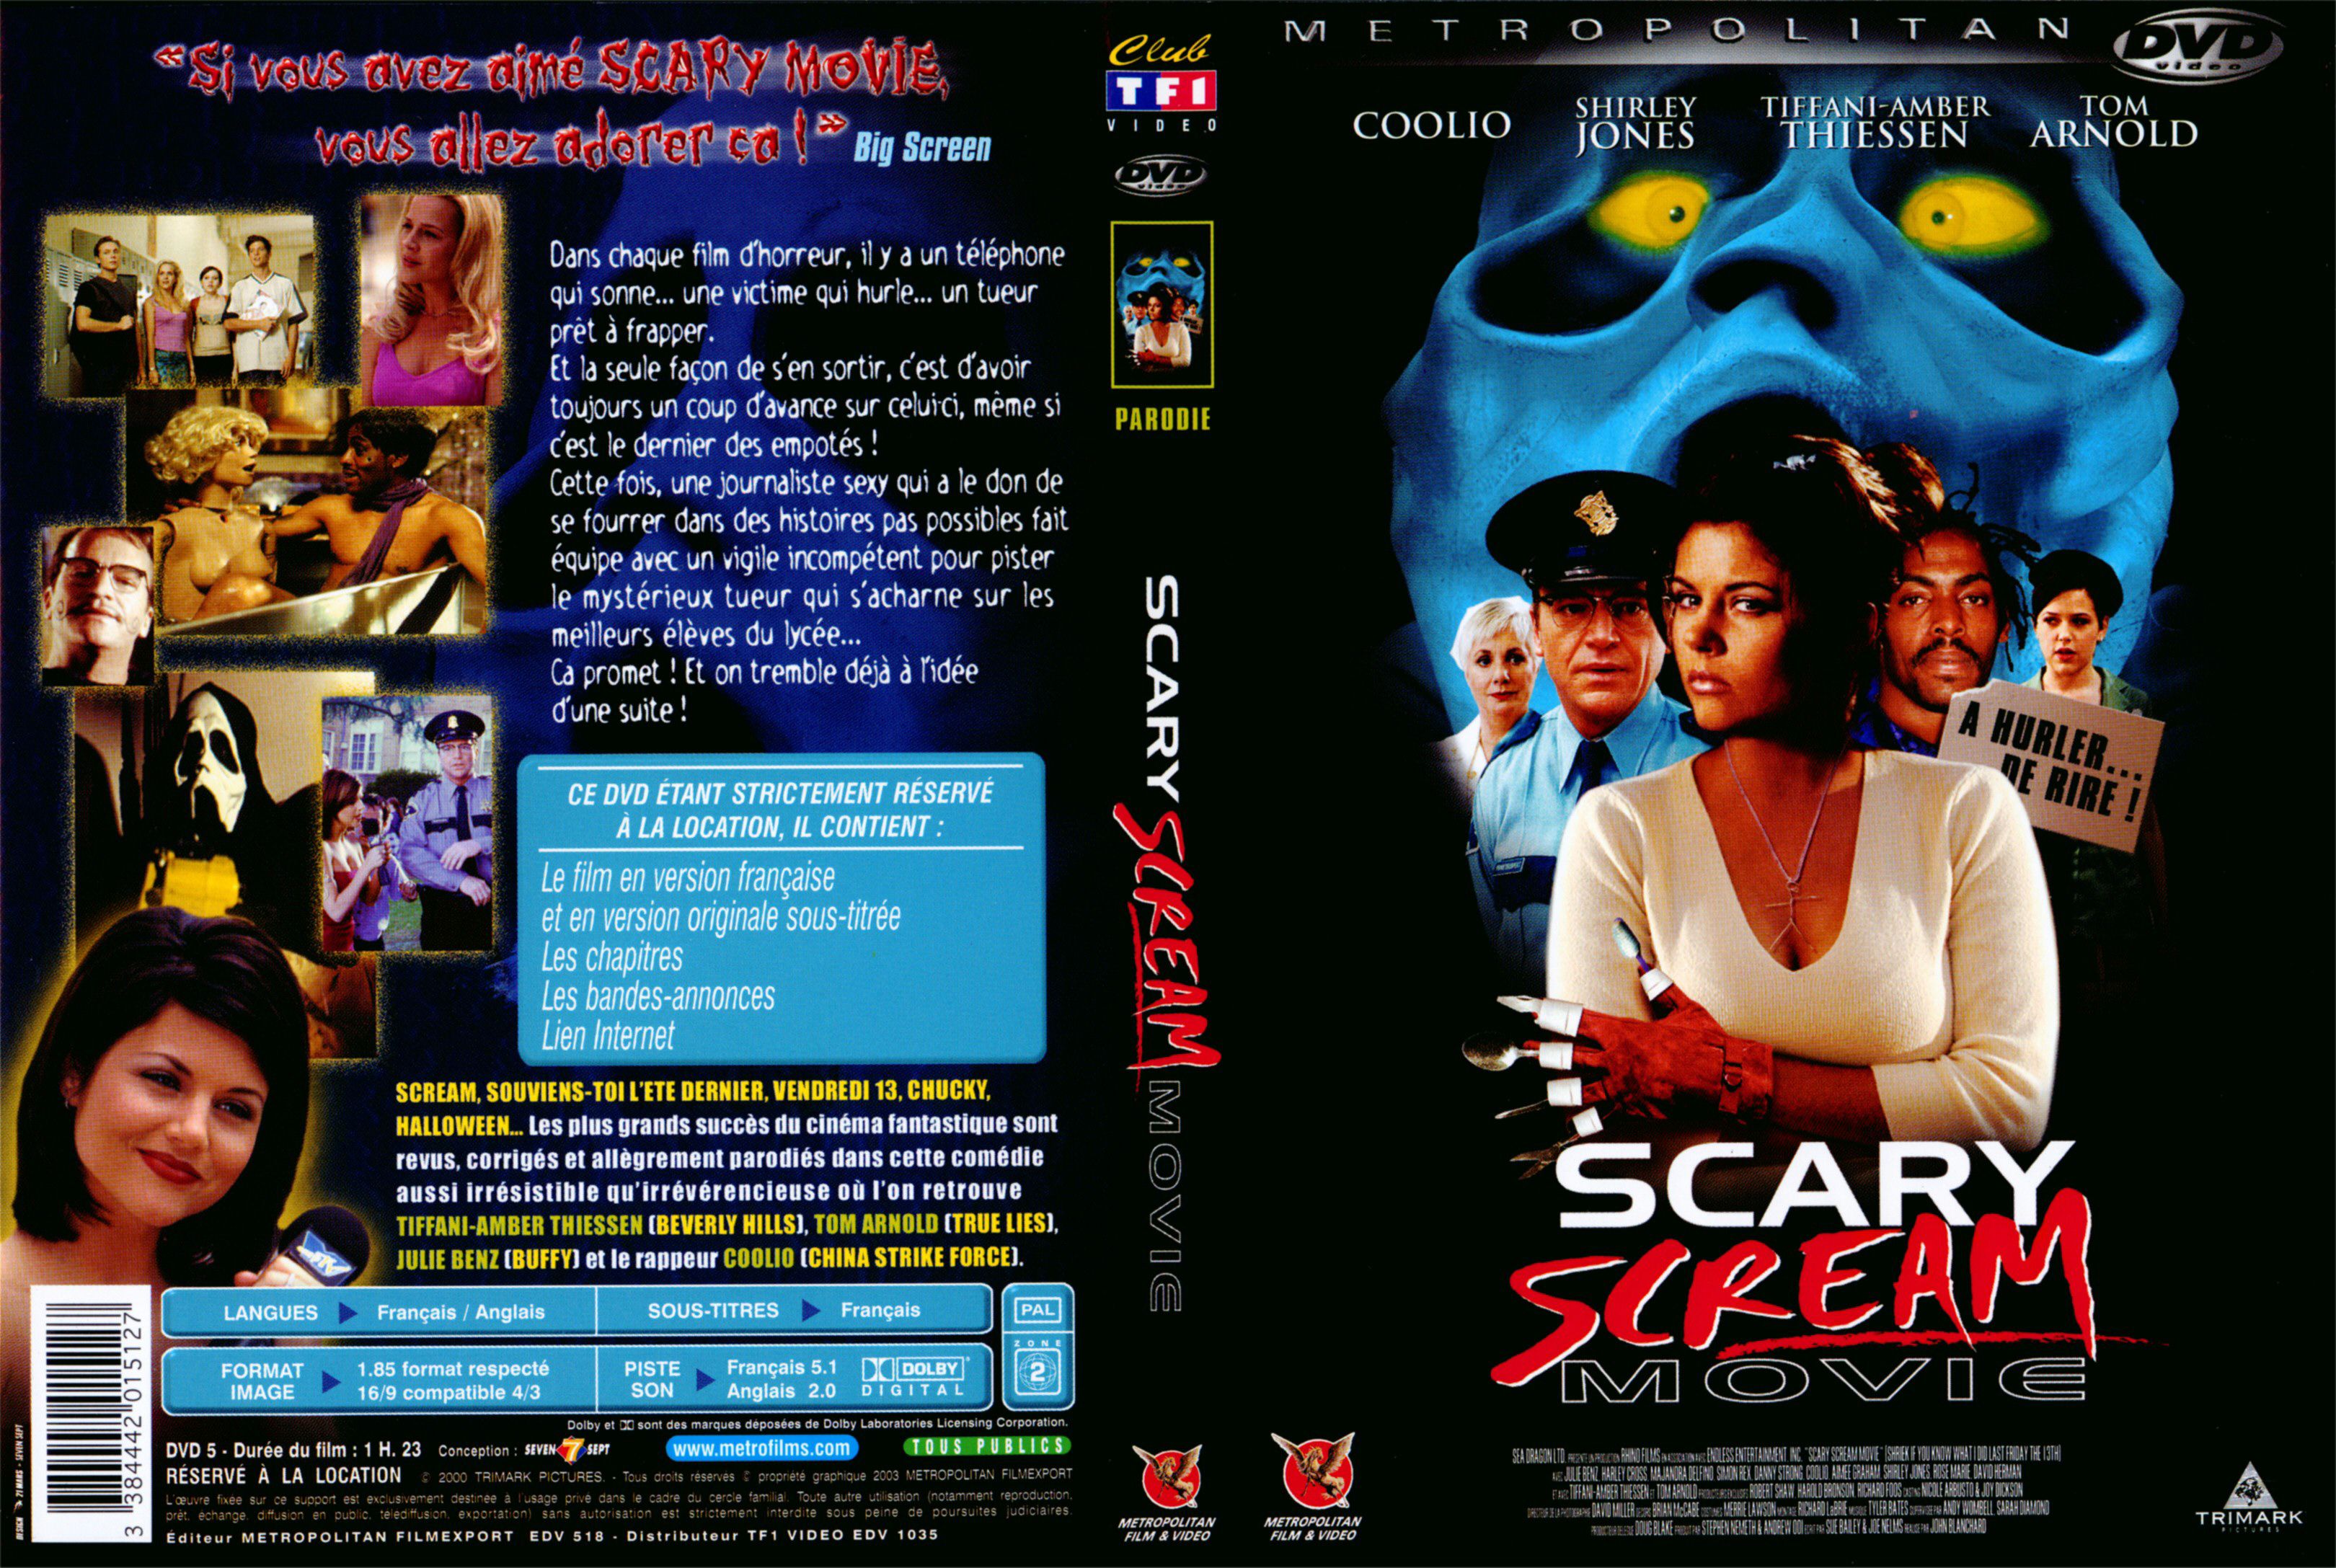 Jaquette DVD Scary scream movie v2